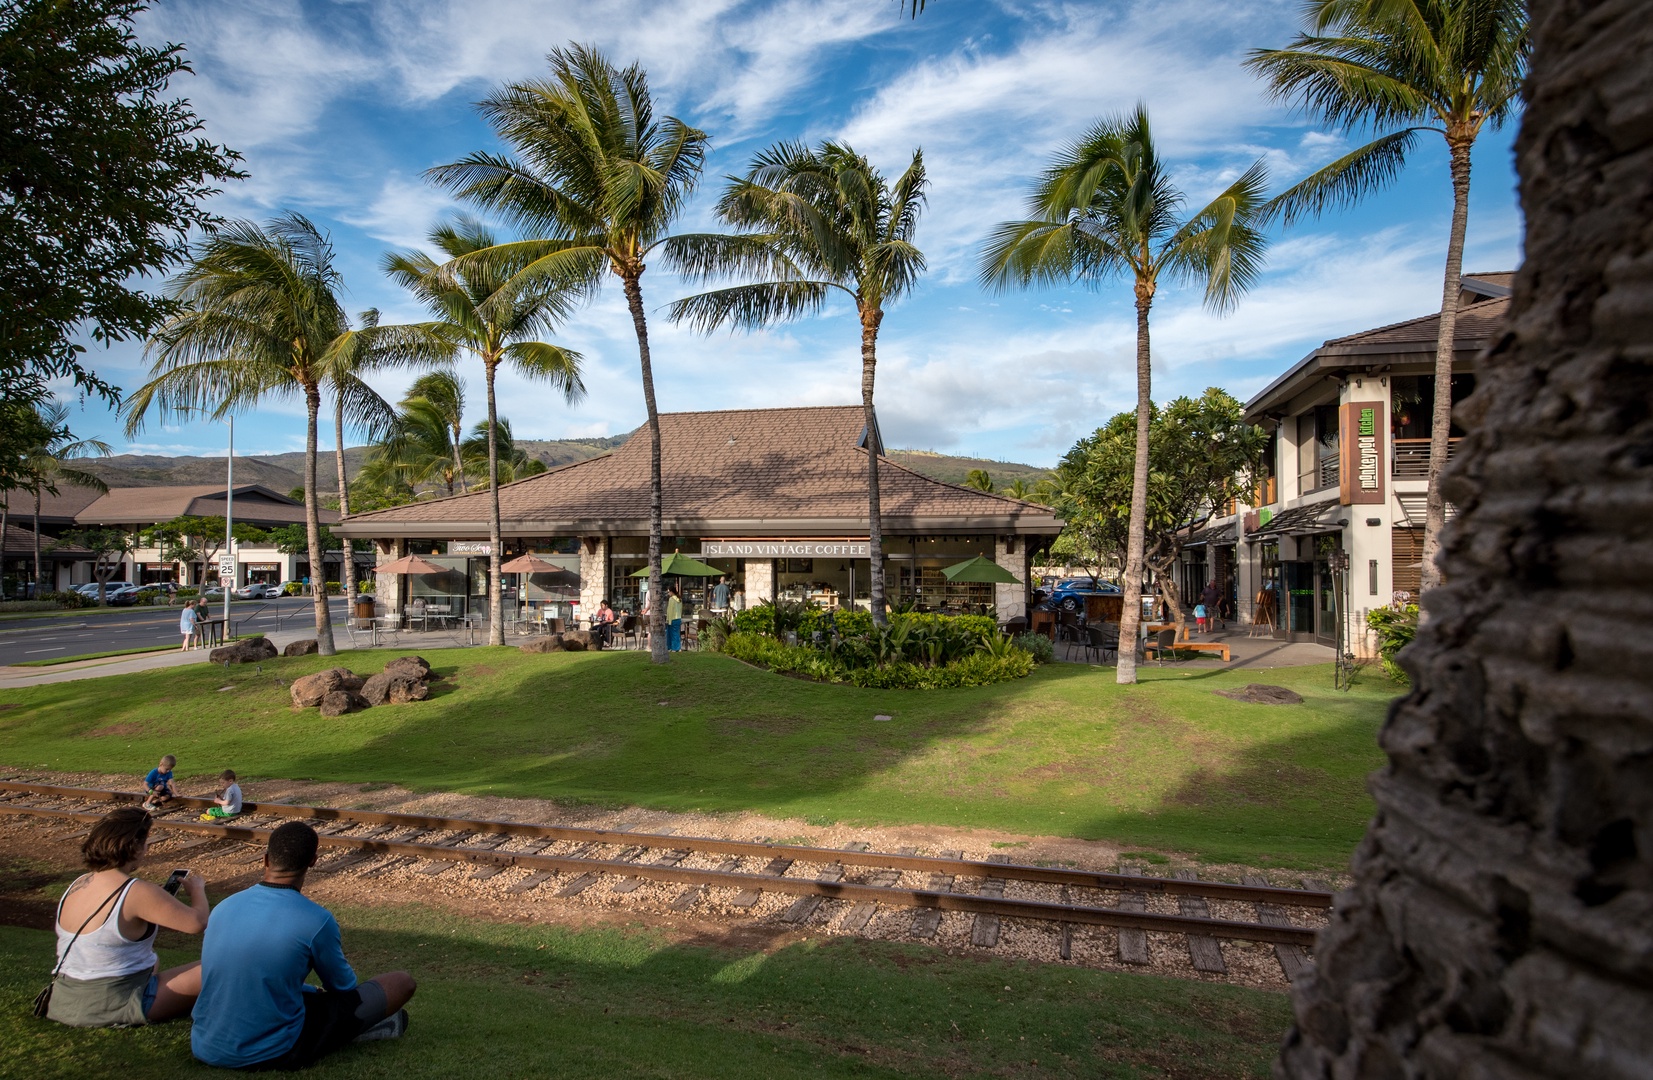 Kapolei Vacation Rentals, Coconut Plantation 1078-3 - Shopping and dining at the resort.